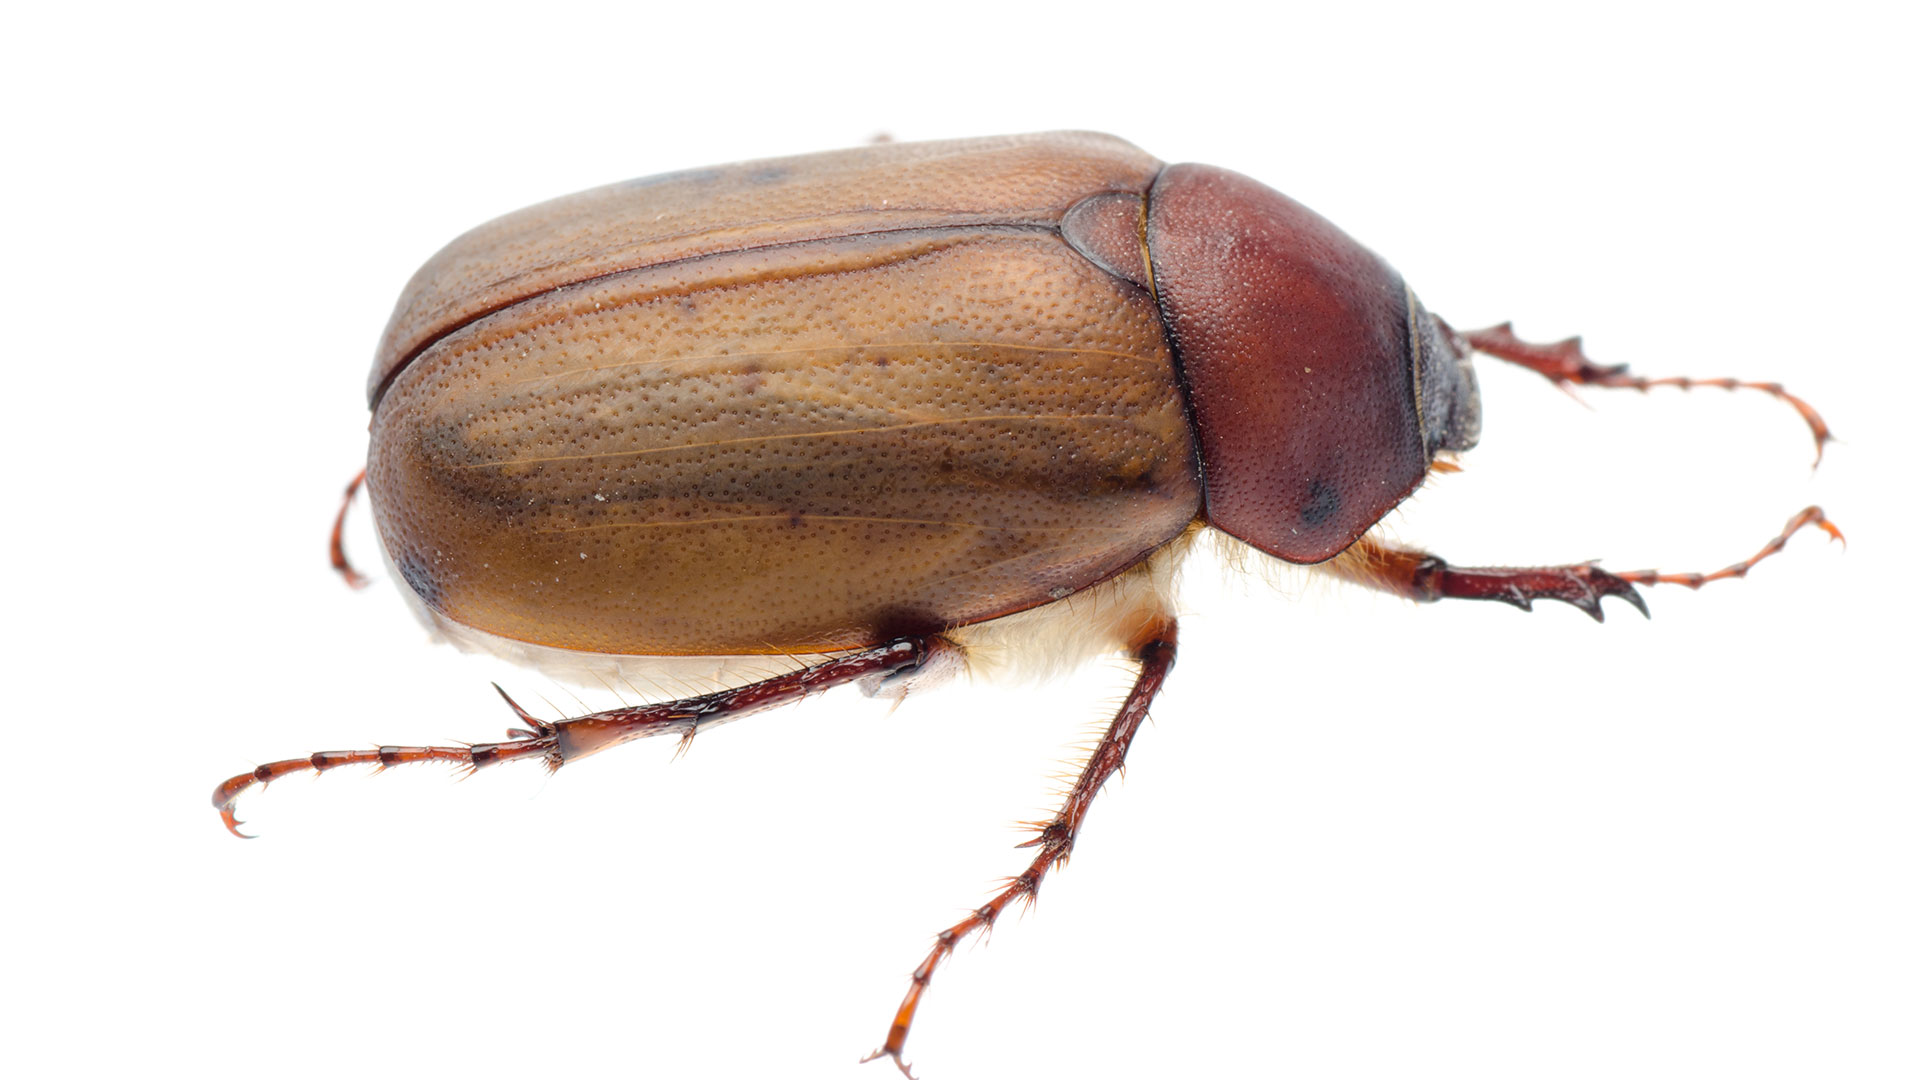 June Beetles/May Beetles/Chafer - Environmental Factor